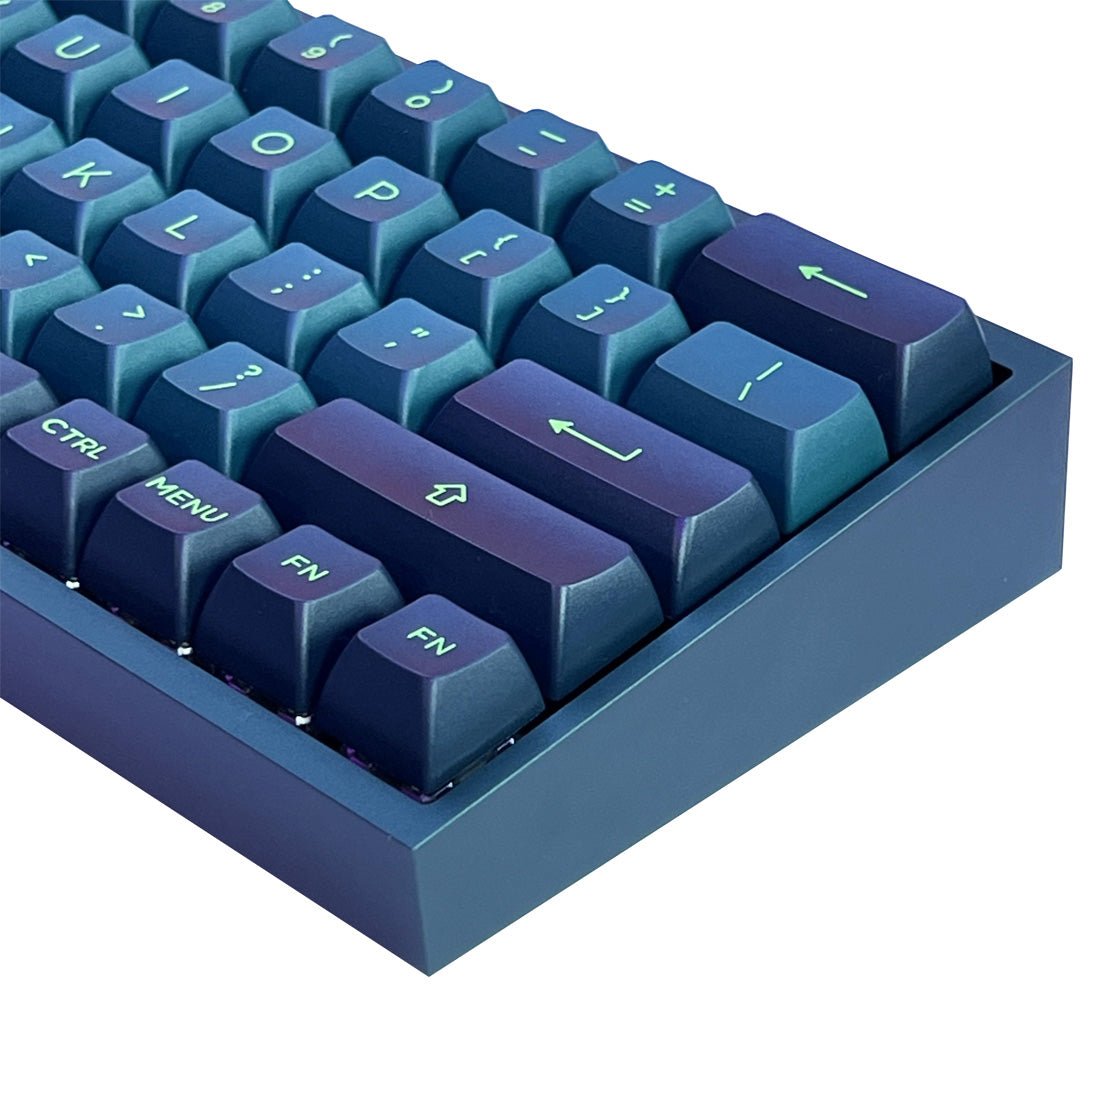 (Pre-Owned) Pre-Build Wired Gaming Keyboard - Green - لوحة مفاتيح مجهزة مستعملة - Store 974 | ستور ٩٧٤